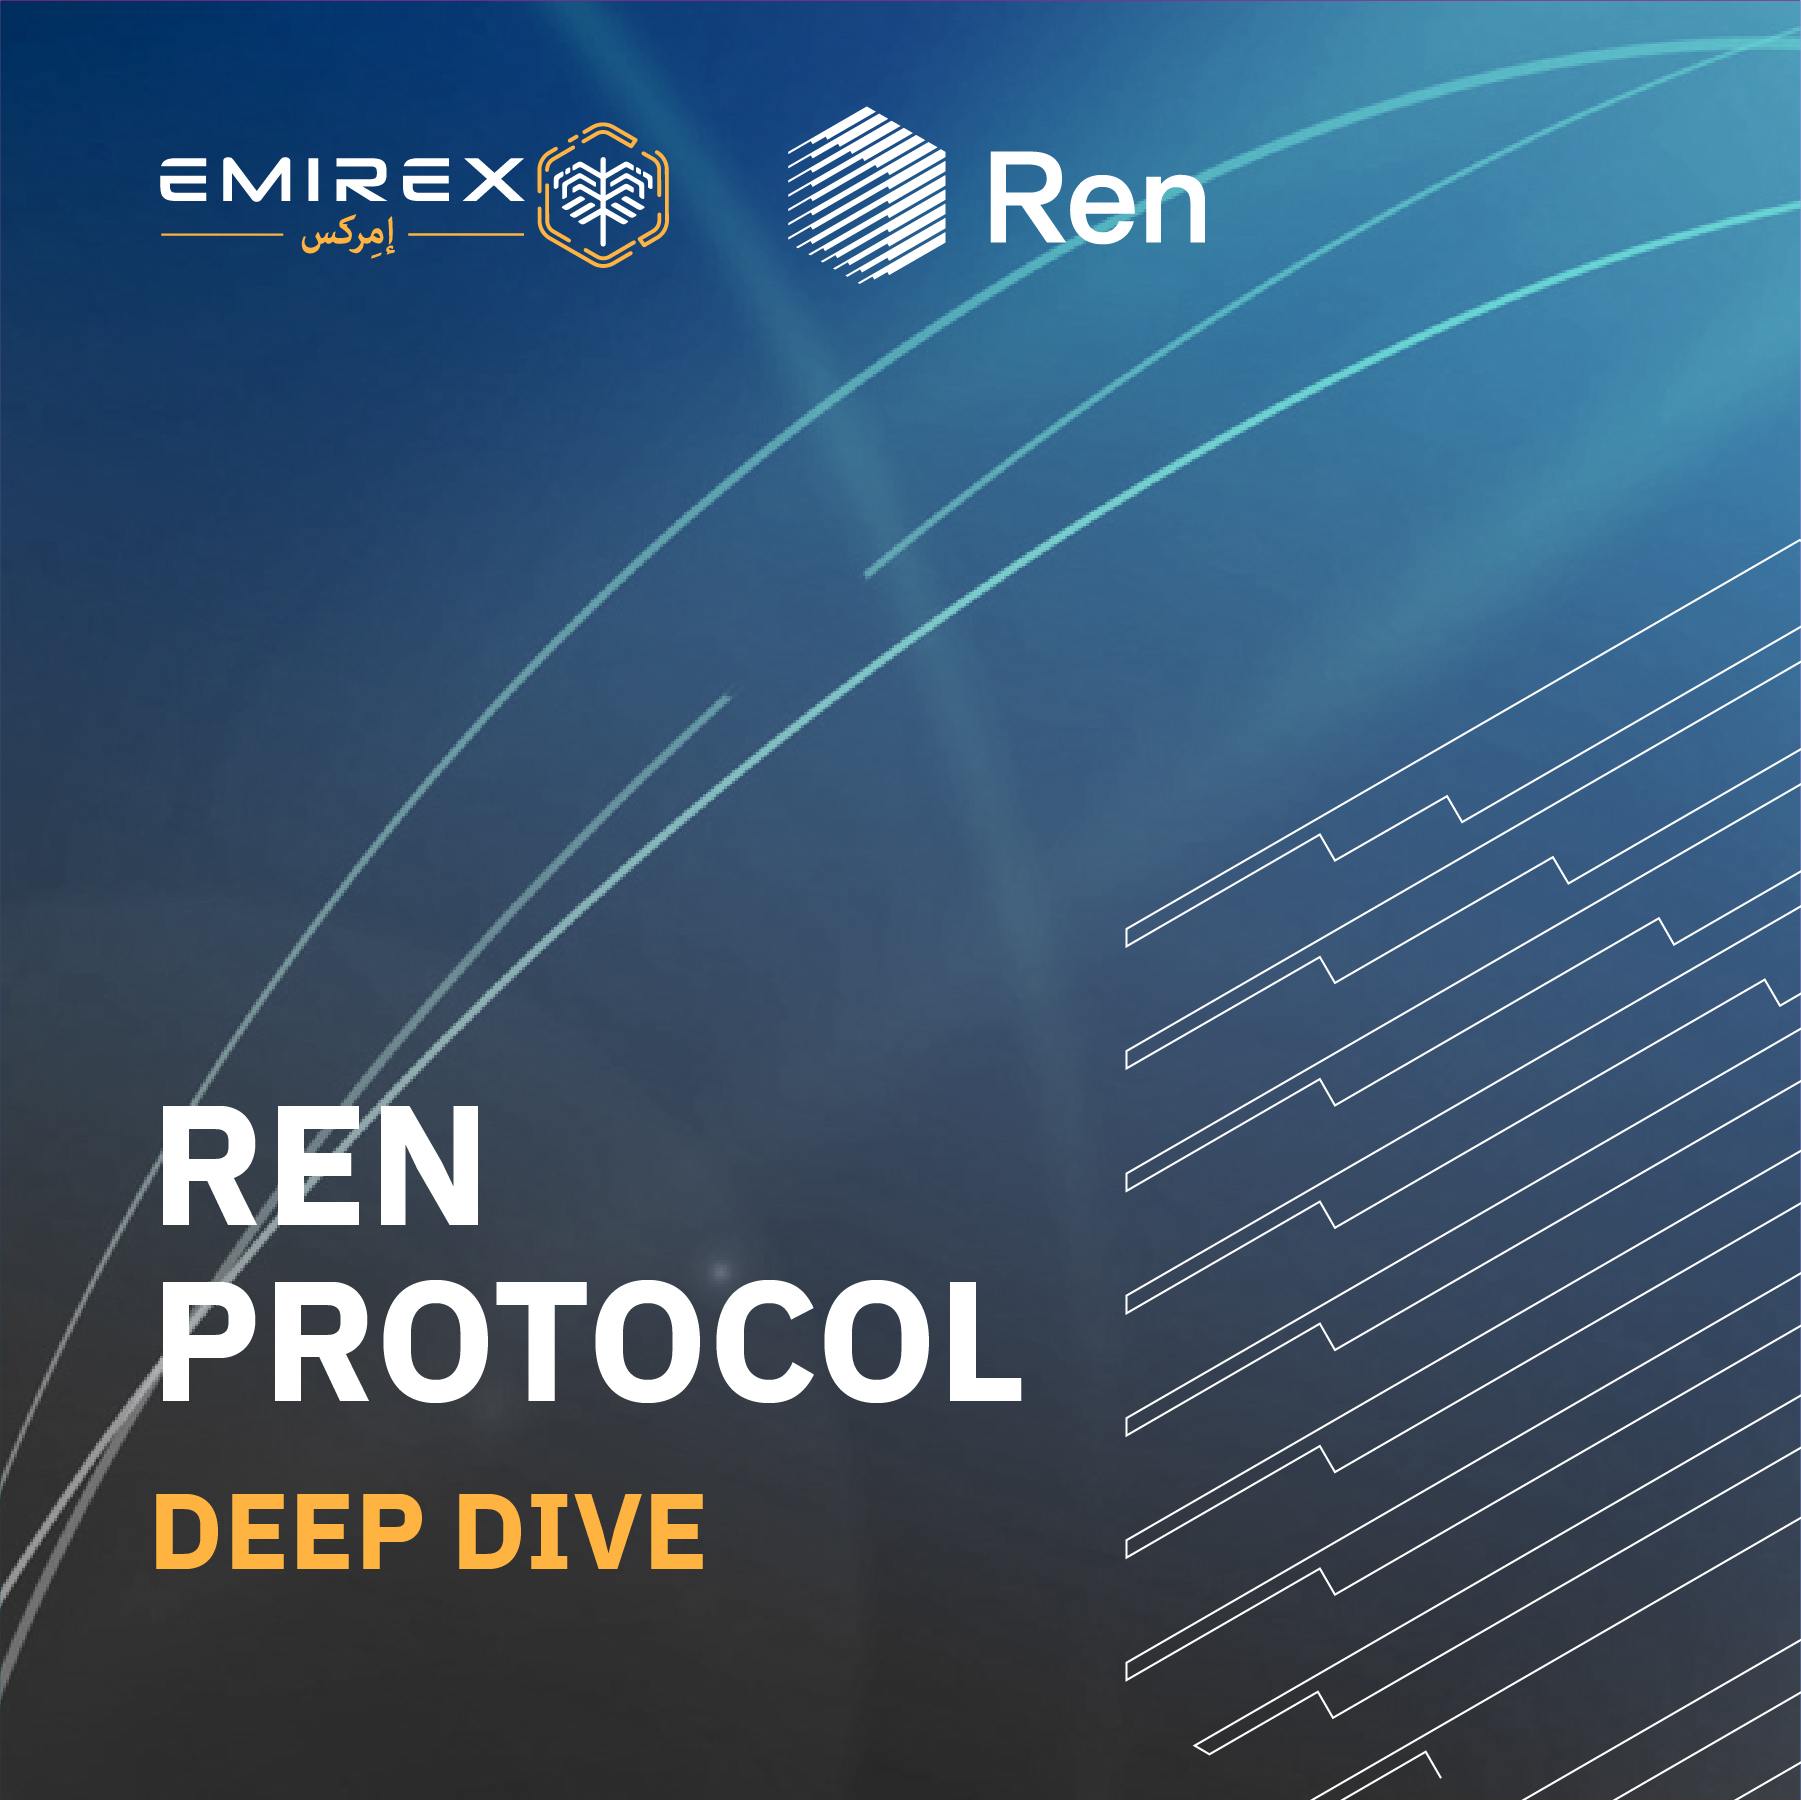 Deep Dive into Ren Protocol